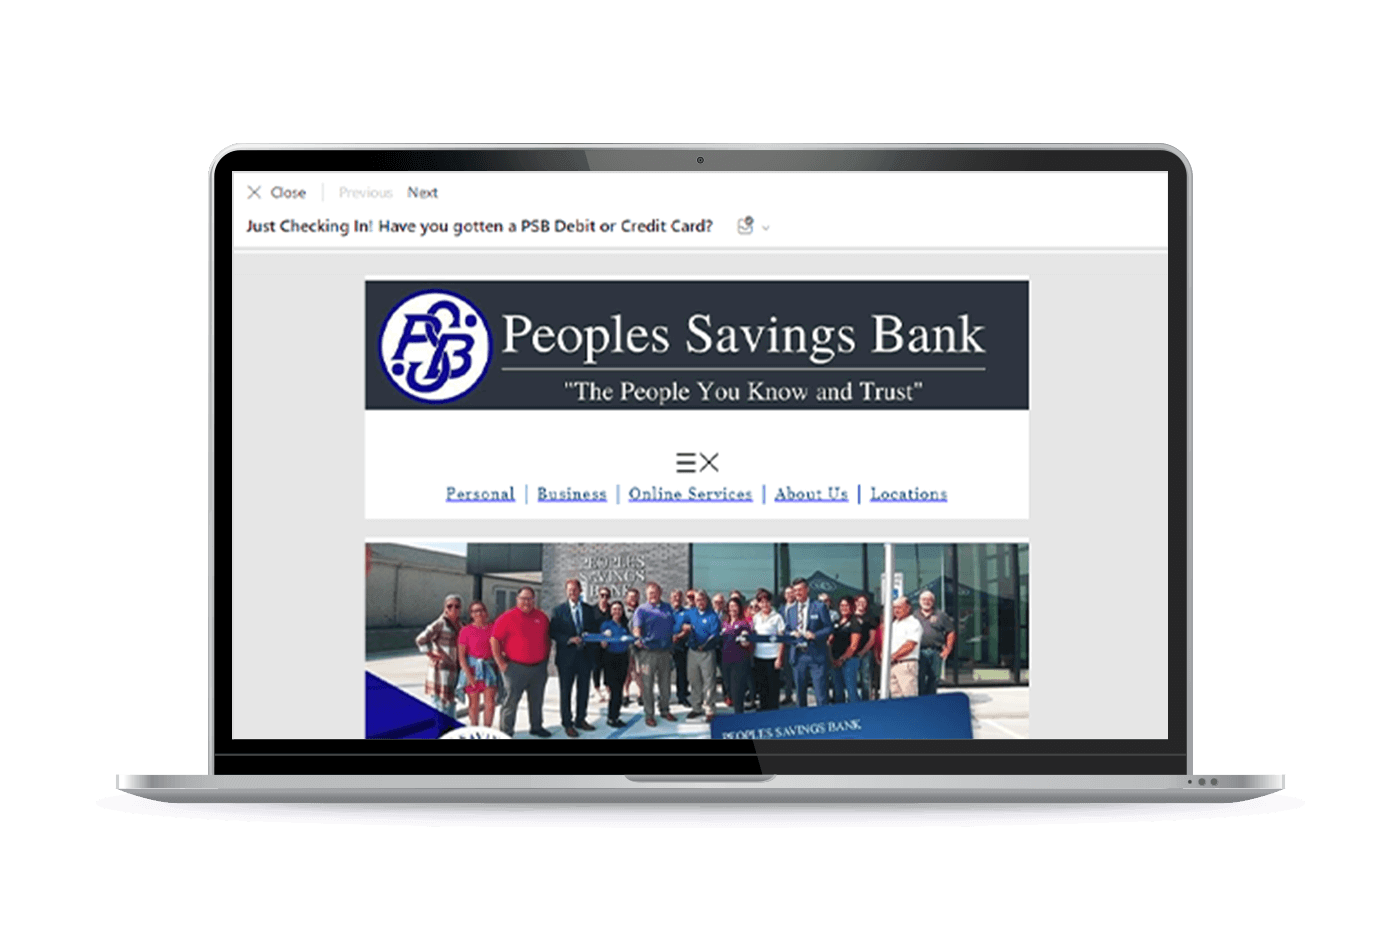 Peoples Savings Bank Email Mockup